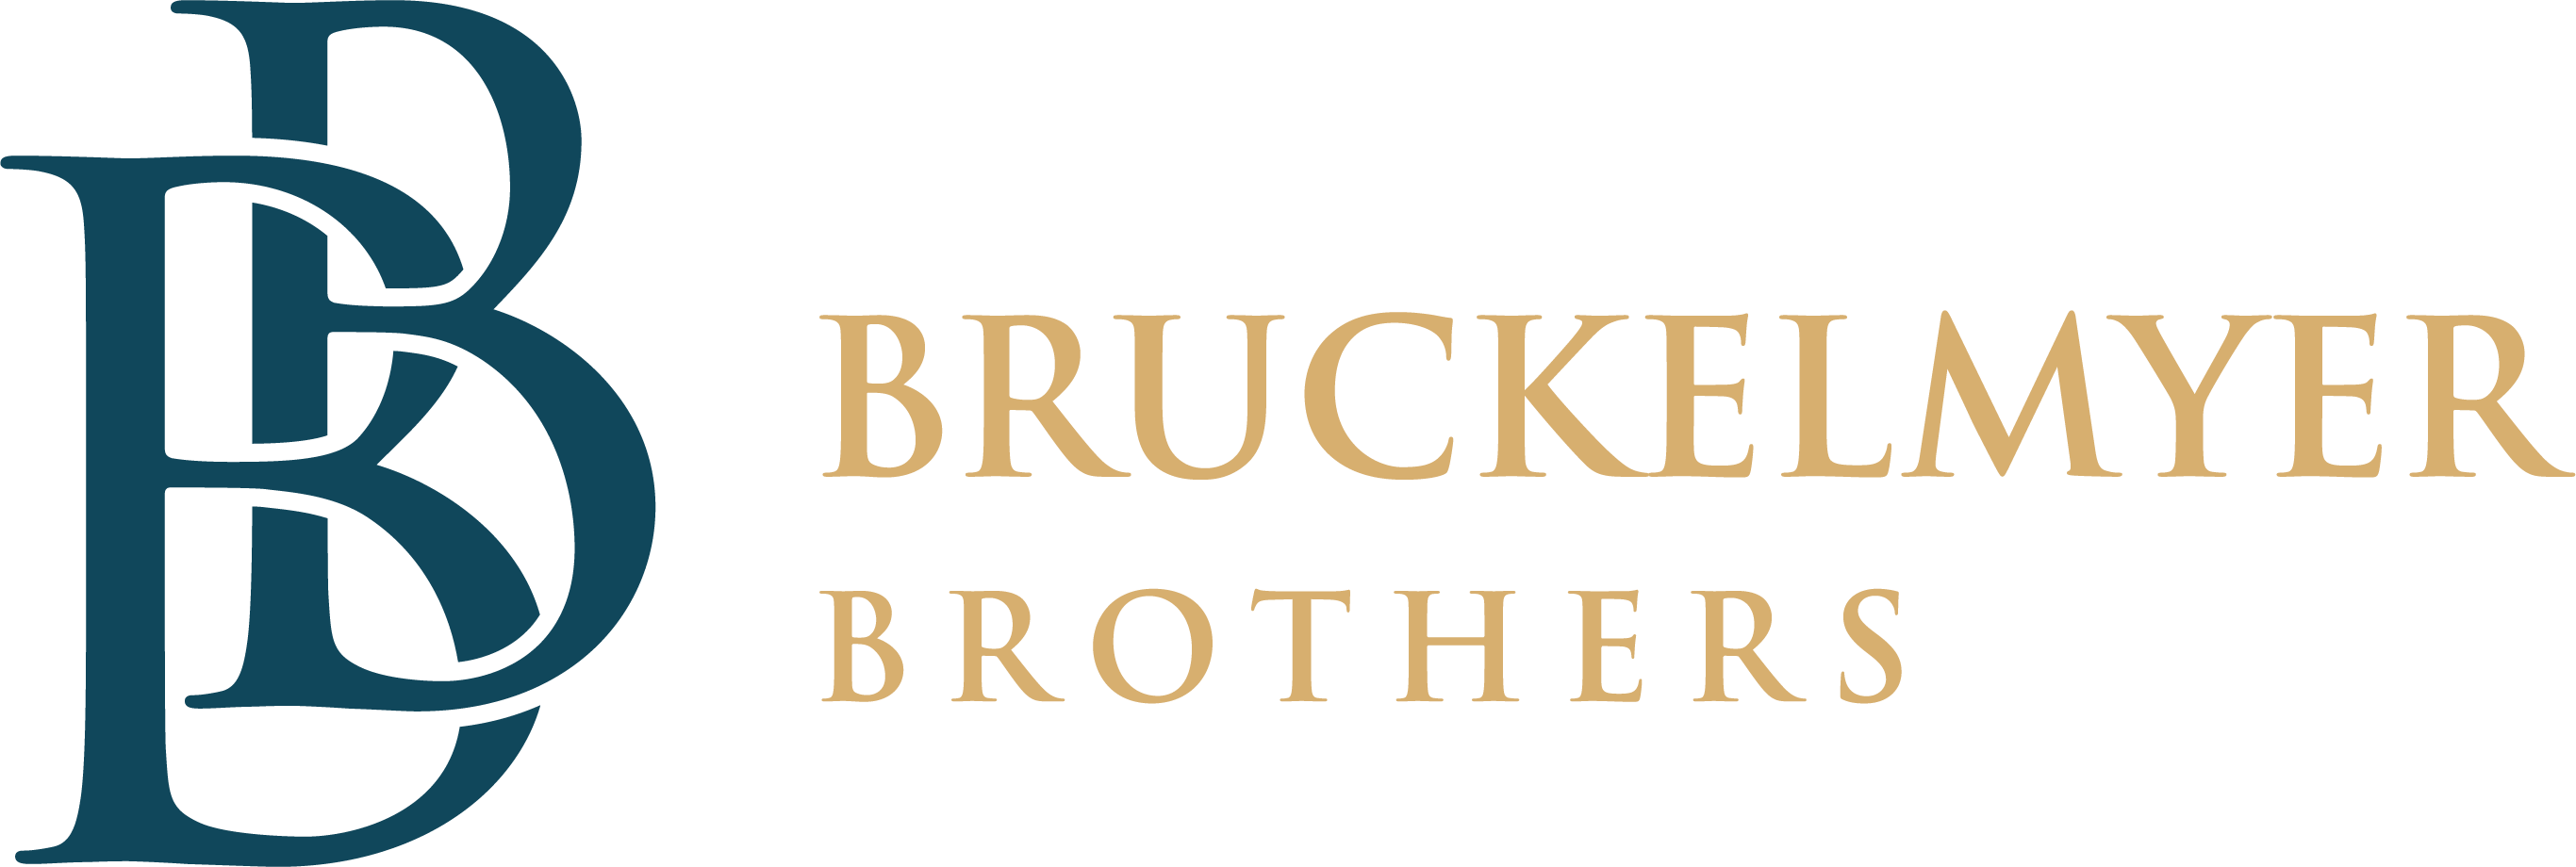 Bruckelmyer Brothers Logo